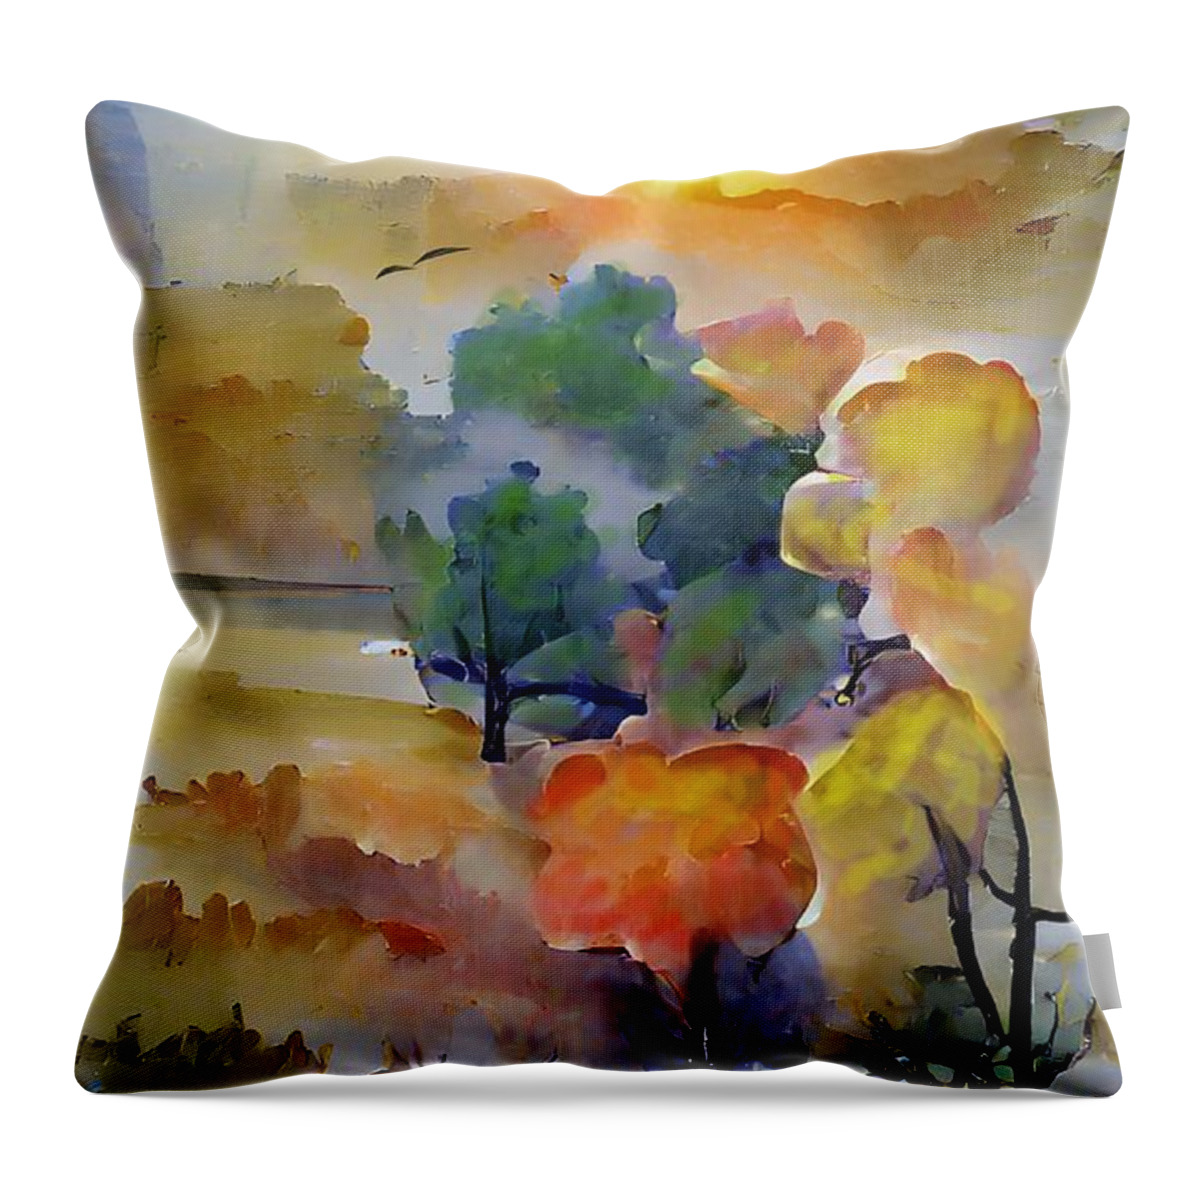 Fine Art Throw Pillow featuring the digital art Sunrise by David Lane